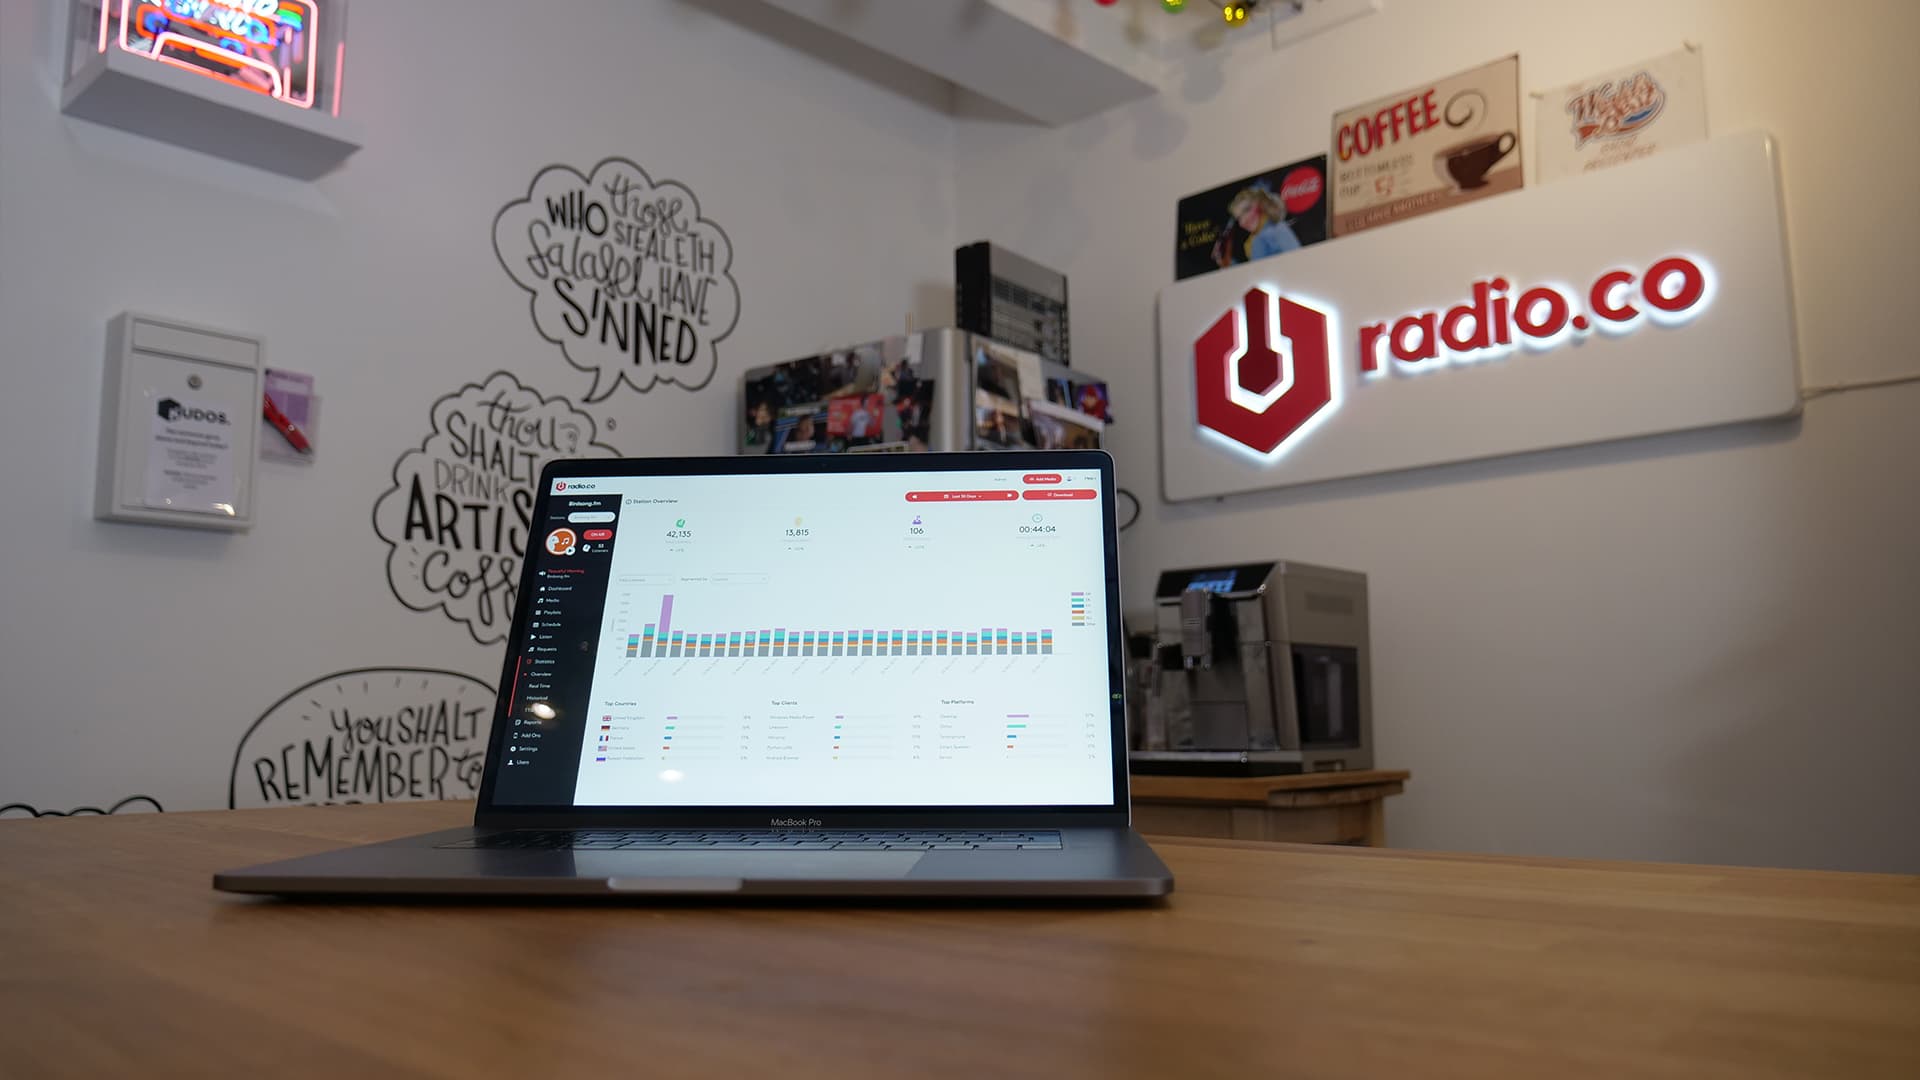 Start an Internet Radio Station: Radio.co on laptop